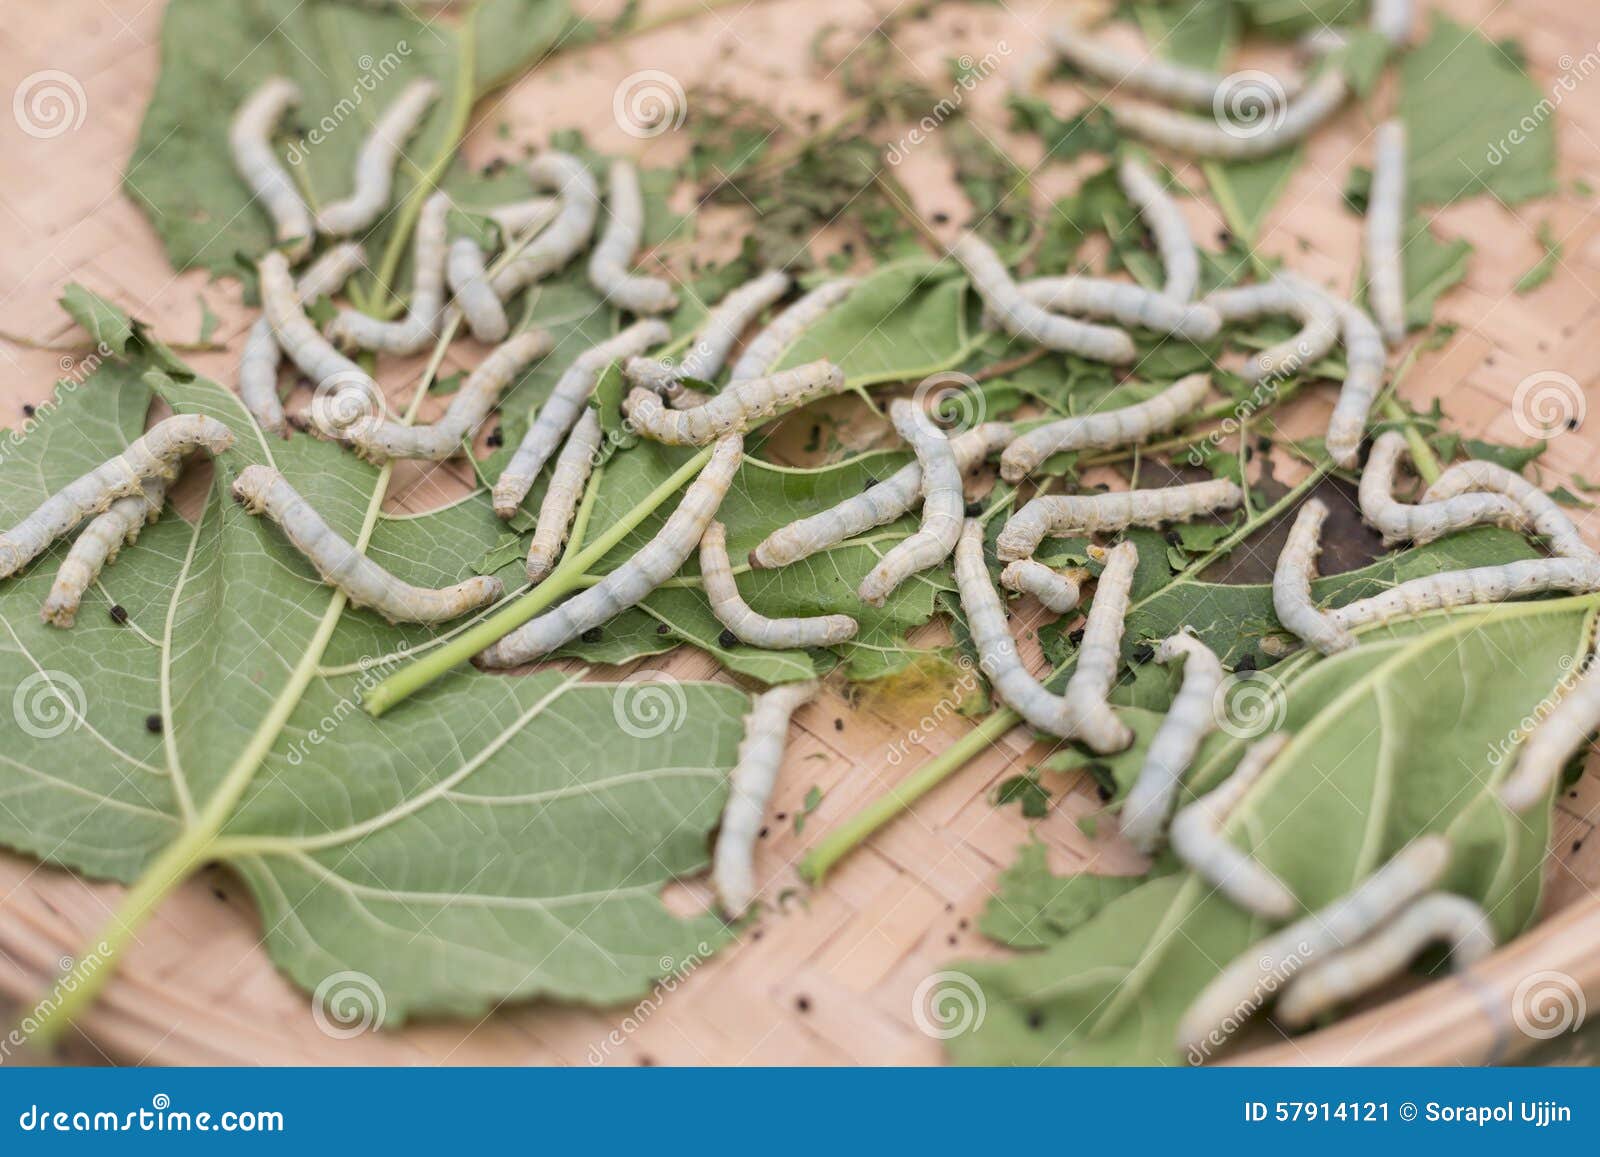 buitenspiegel Zakenman Absoluut Silk worm cocoons stock image. Image of background, green - 57914121